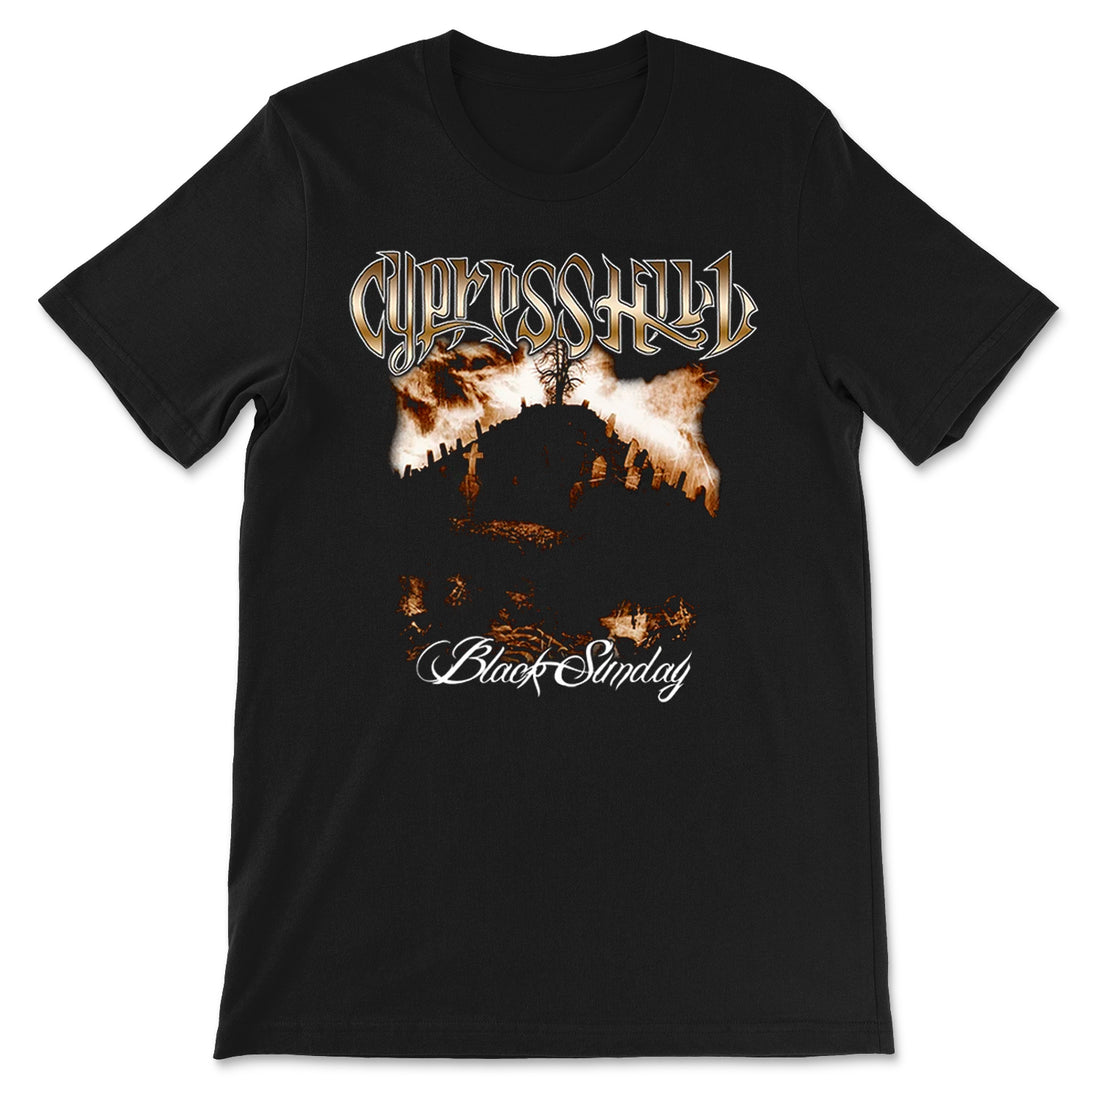 Cypress Hill 'Black Sunday' T-Shirt